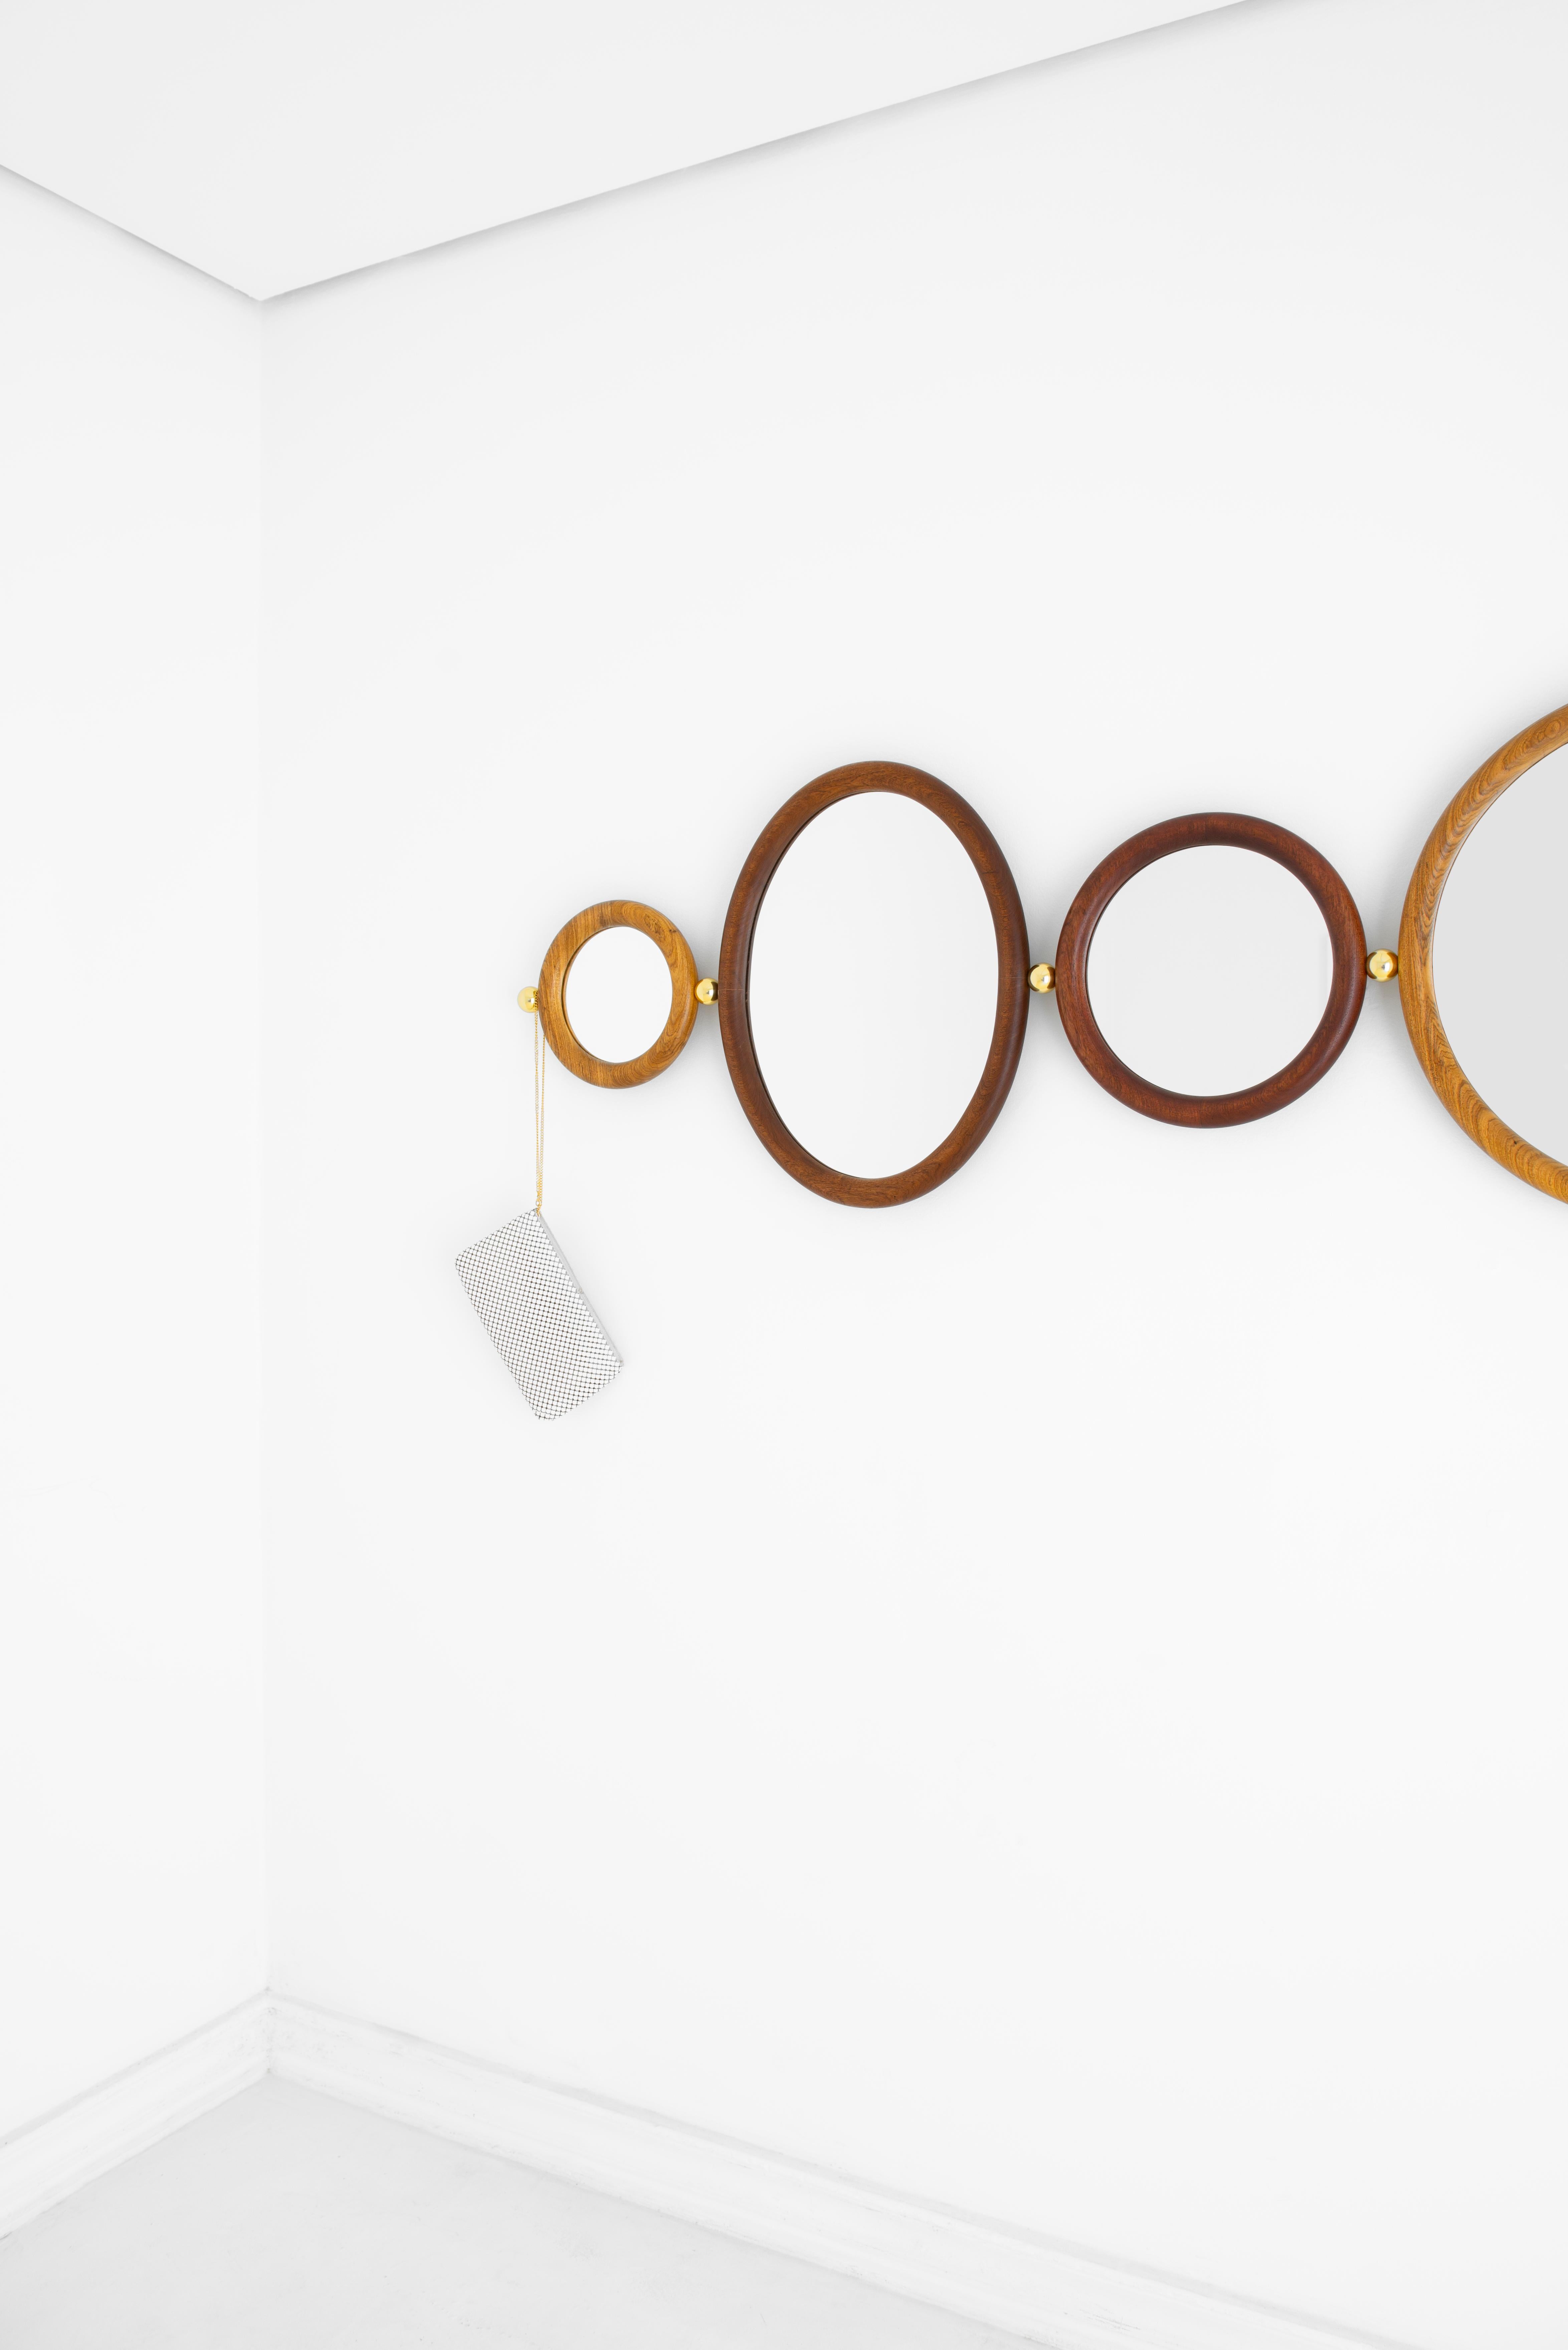 Set of 4 Aro Mirrors, Leandro Garcia, Contemporary Brazil Design 6